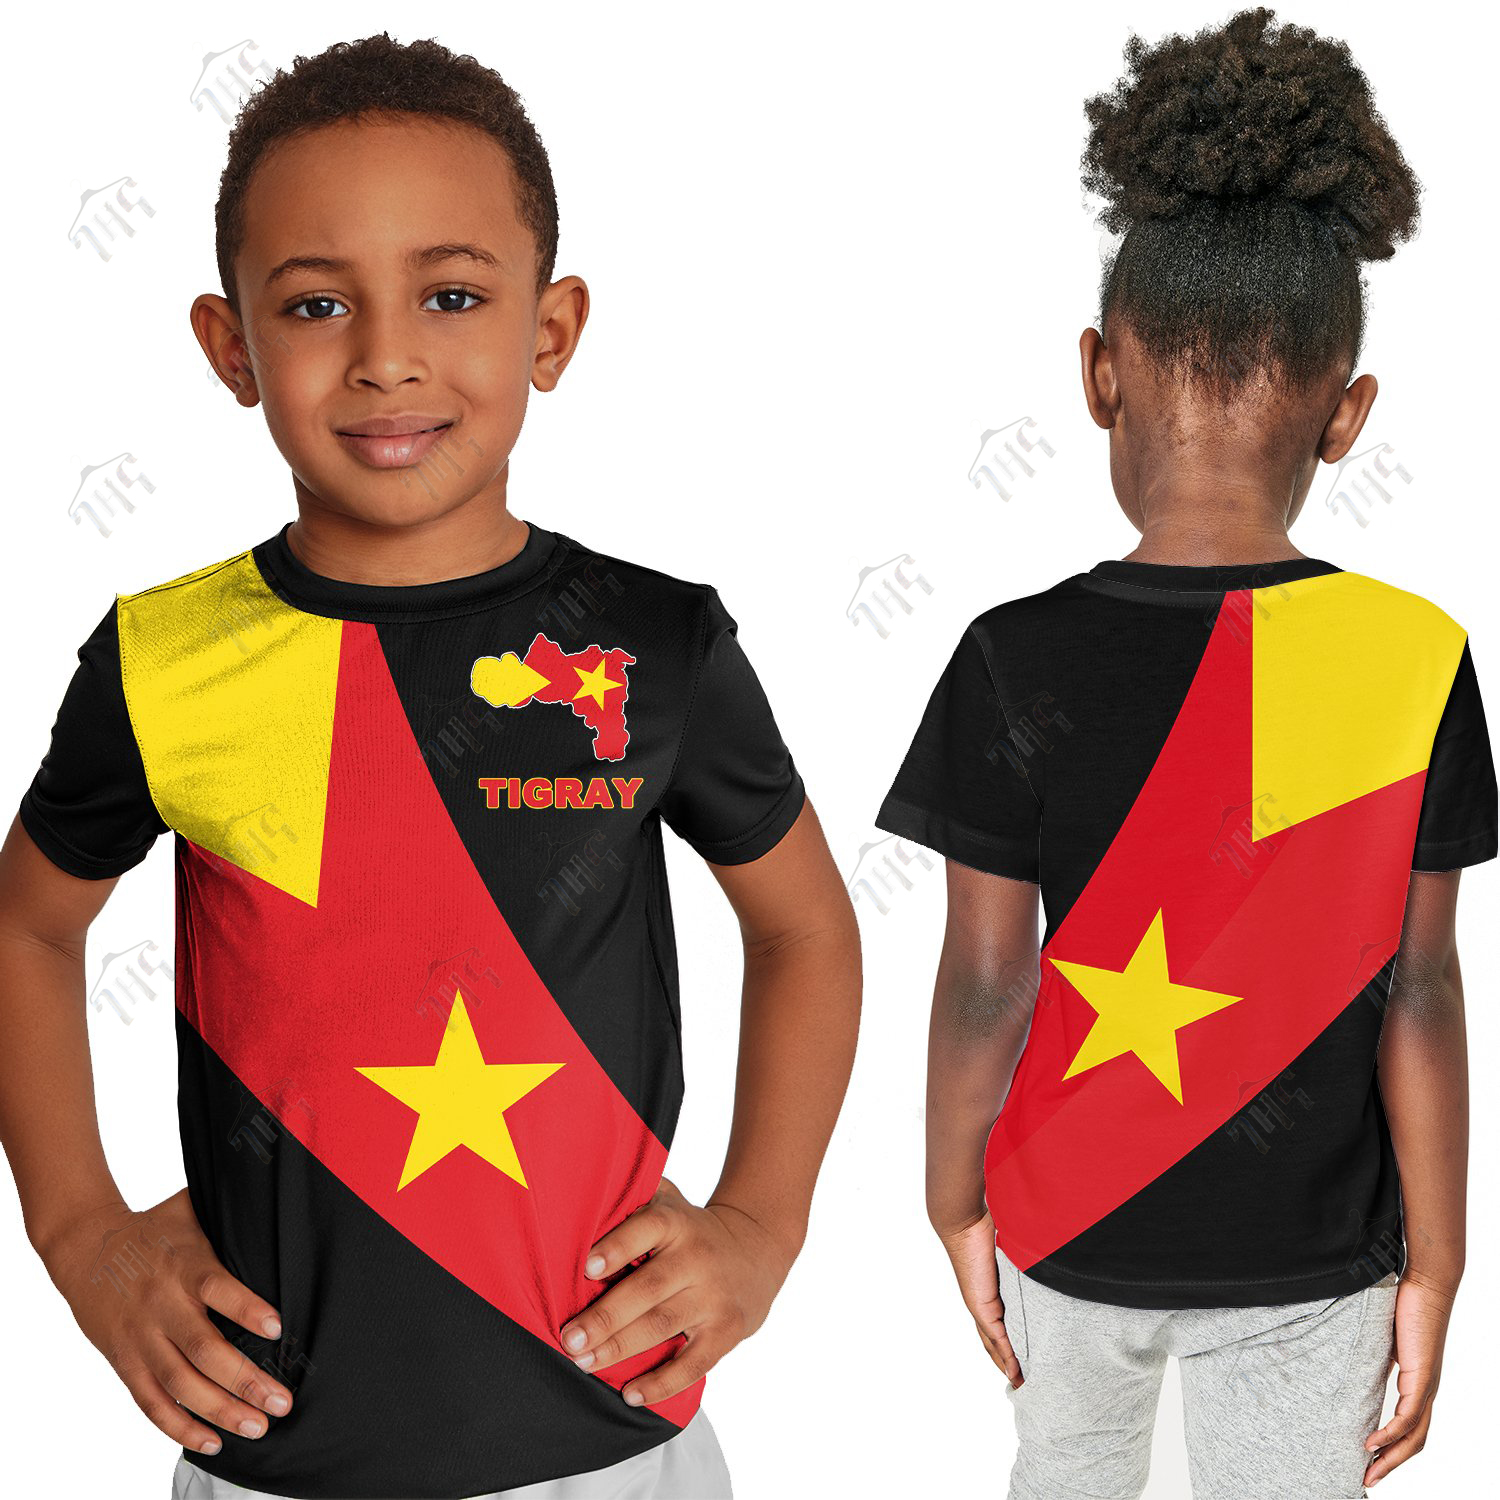 Tigray T-Shirt For Boys | Half Sleeves